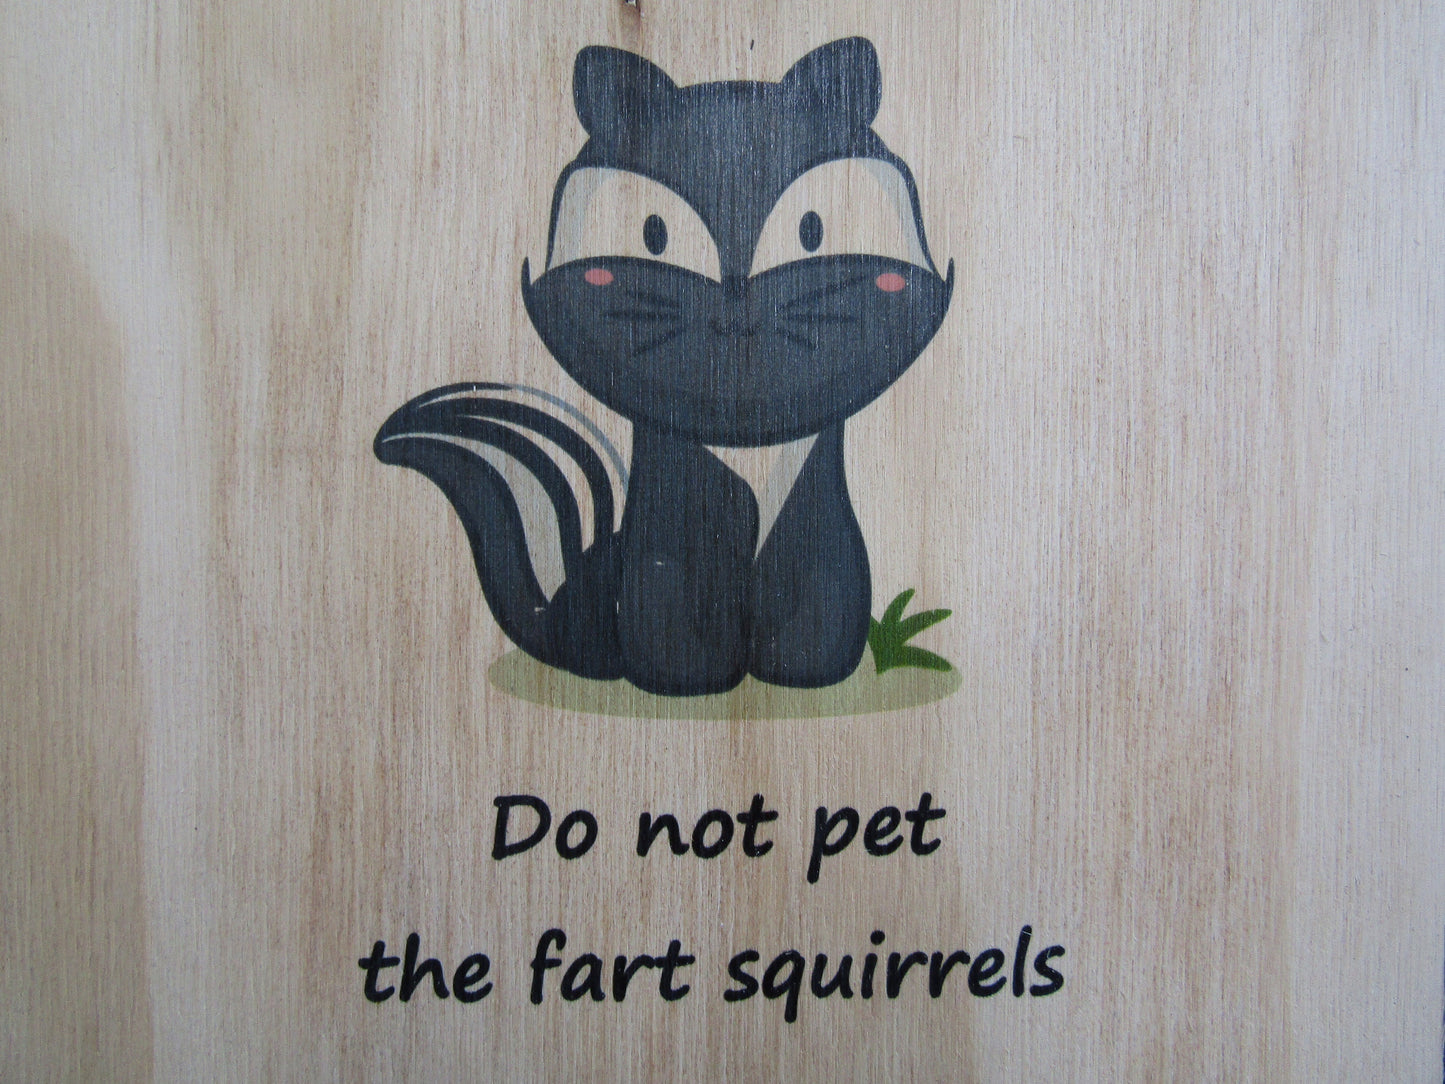 Skunk Fart Squirrell Do Not Pet Cute Cartoon Caution Goofy Humor Wall Decor Art Handmade Unframed Printed In Color Contemporary Joke Decor